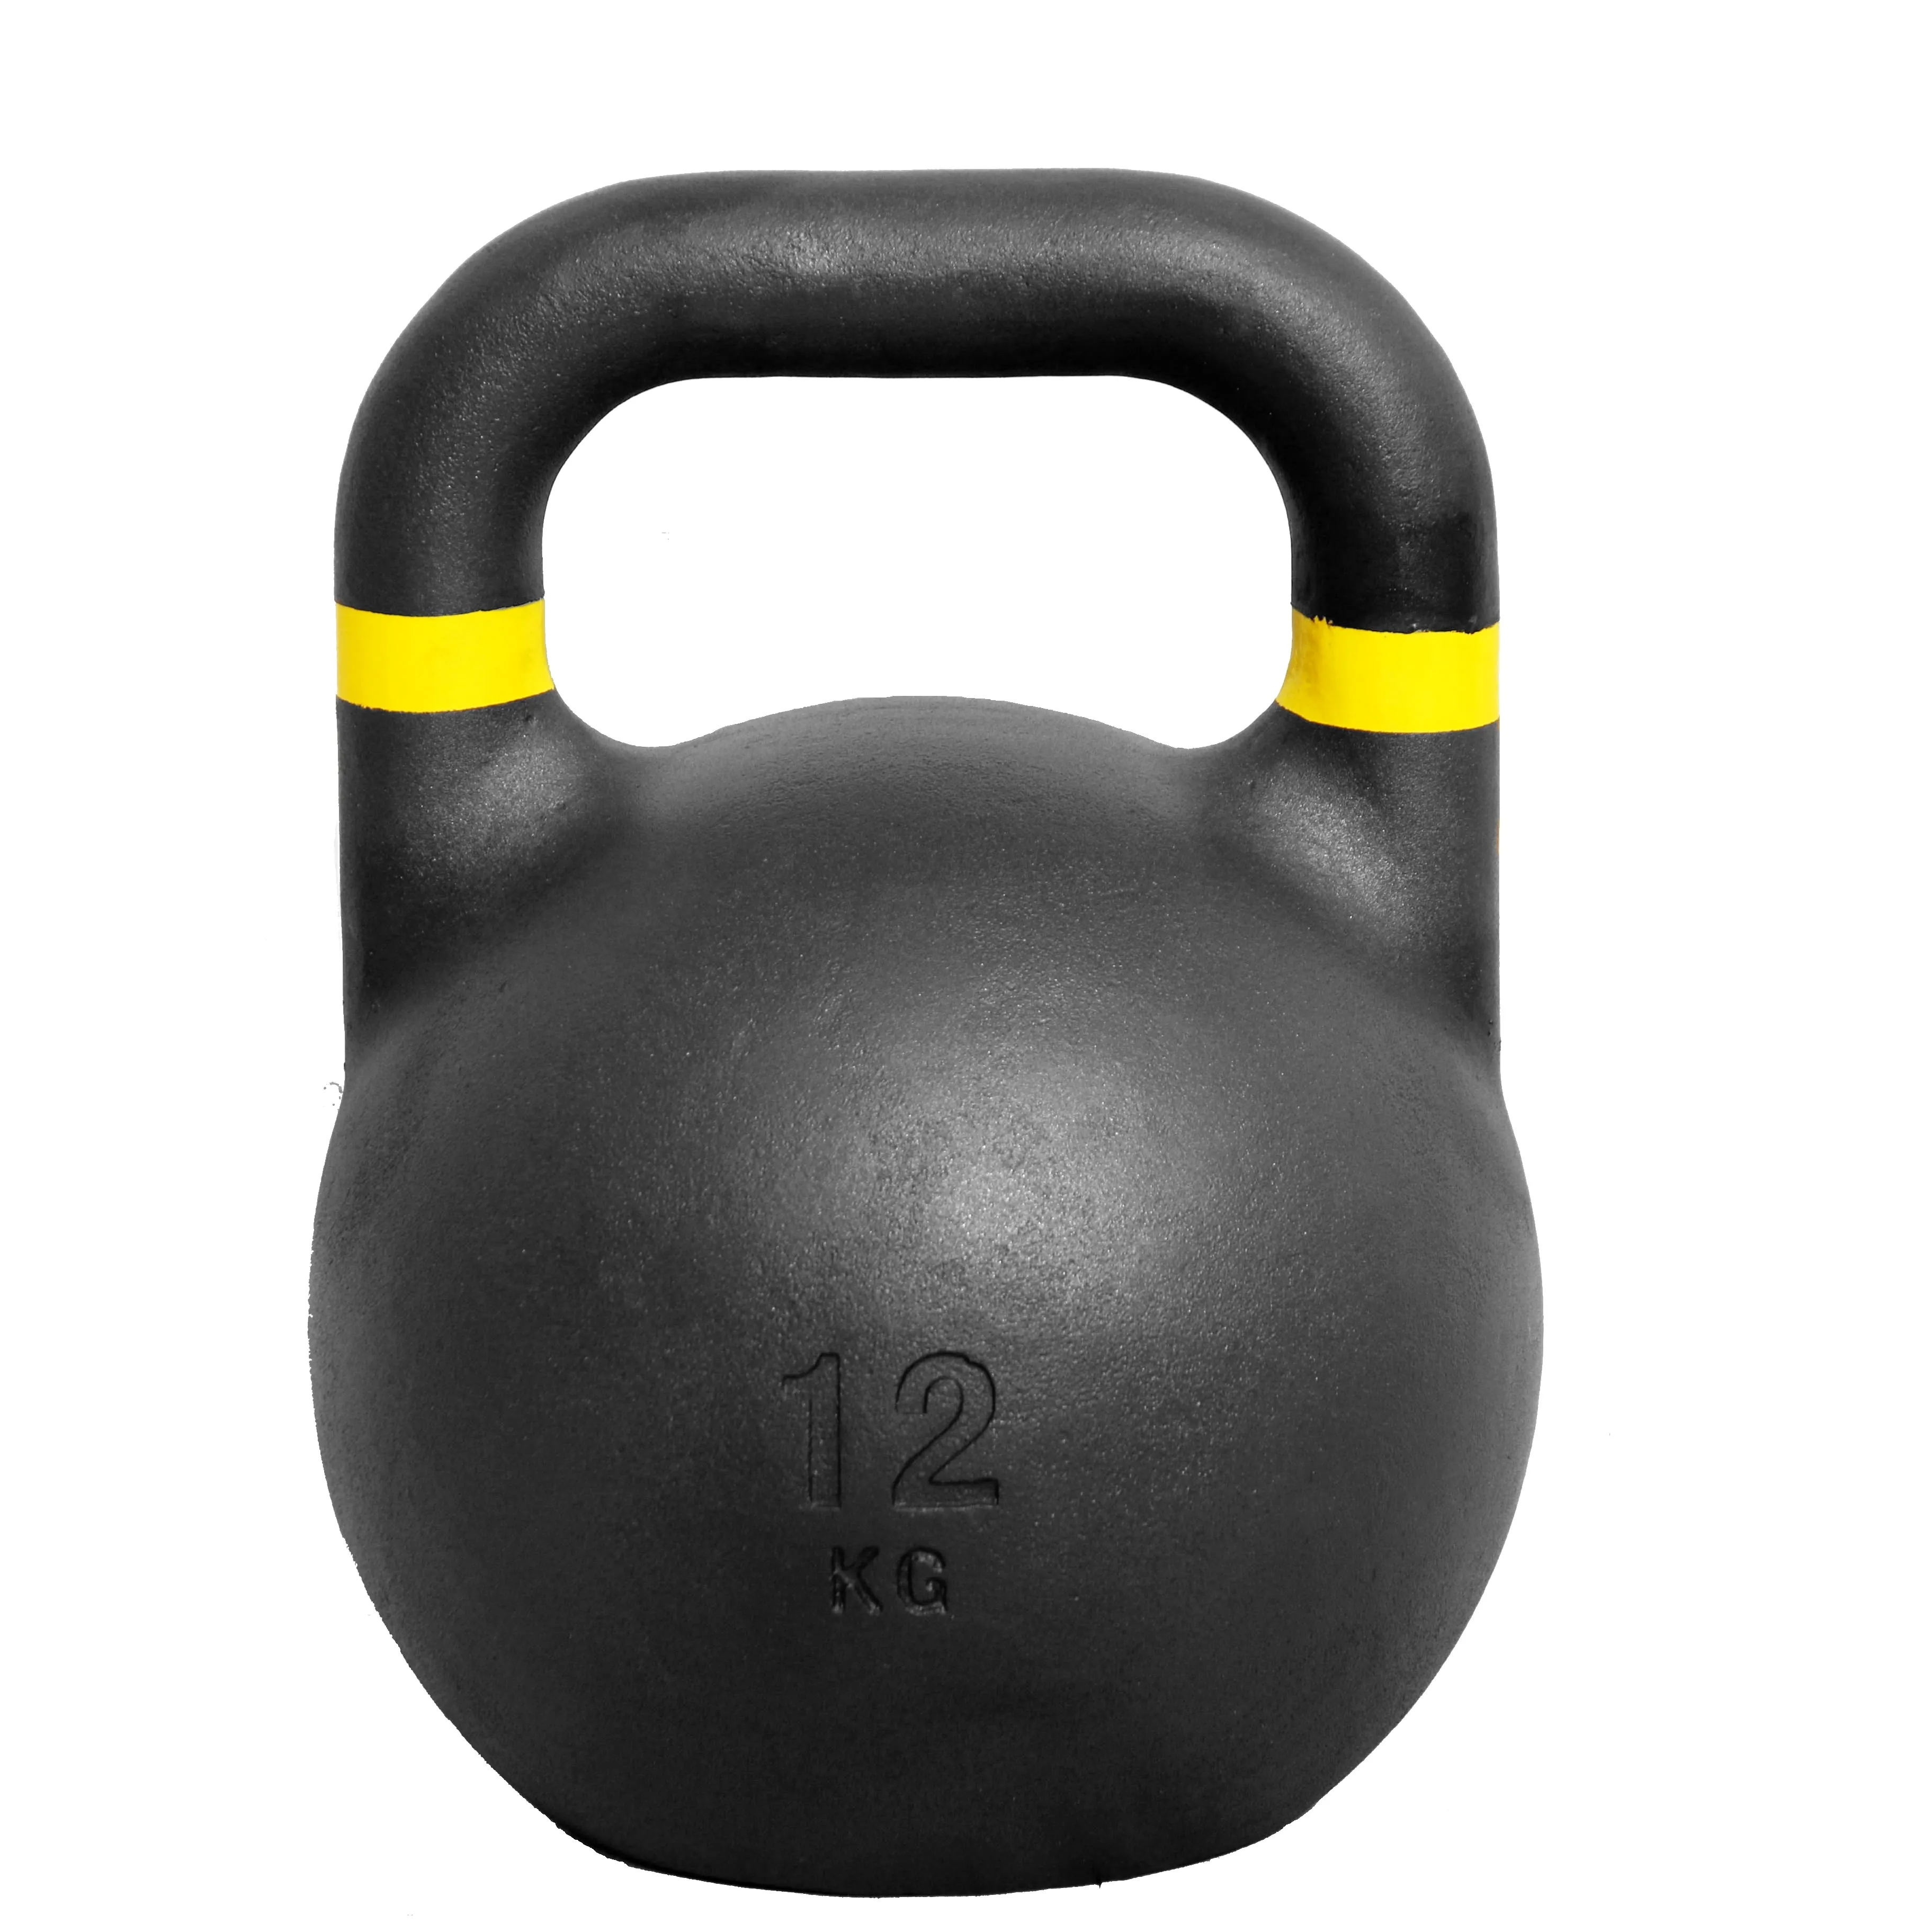 Fitness-Fitness geräte Multifunktion Hochwertige tragbare einstellbare Wettkampf-Kettle bell